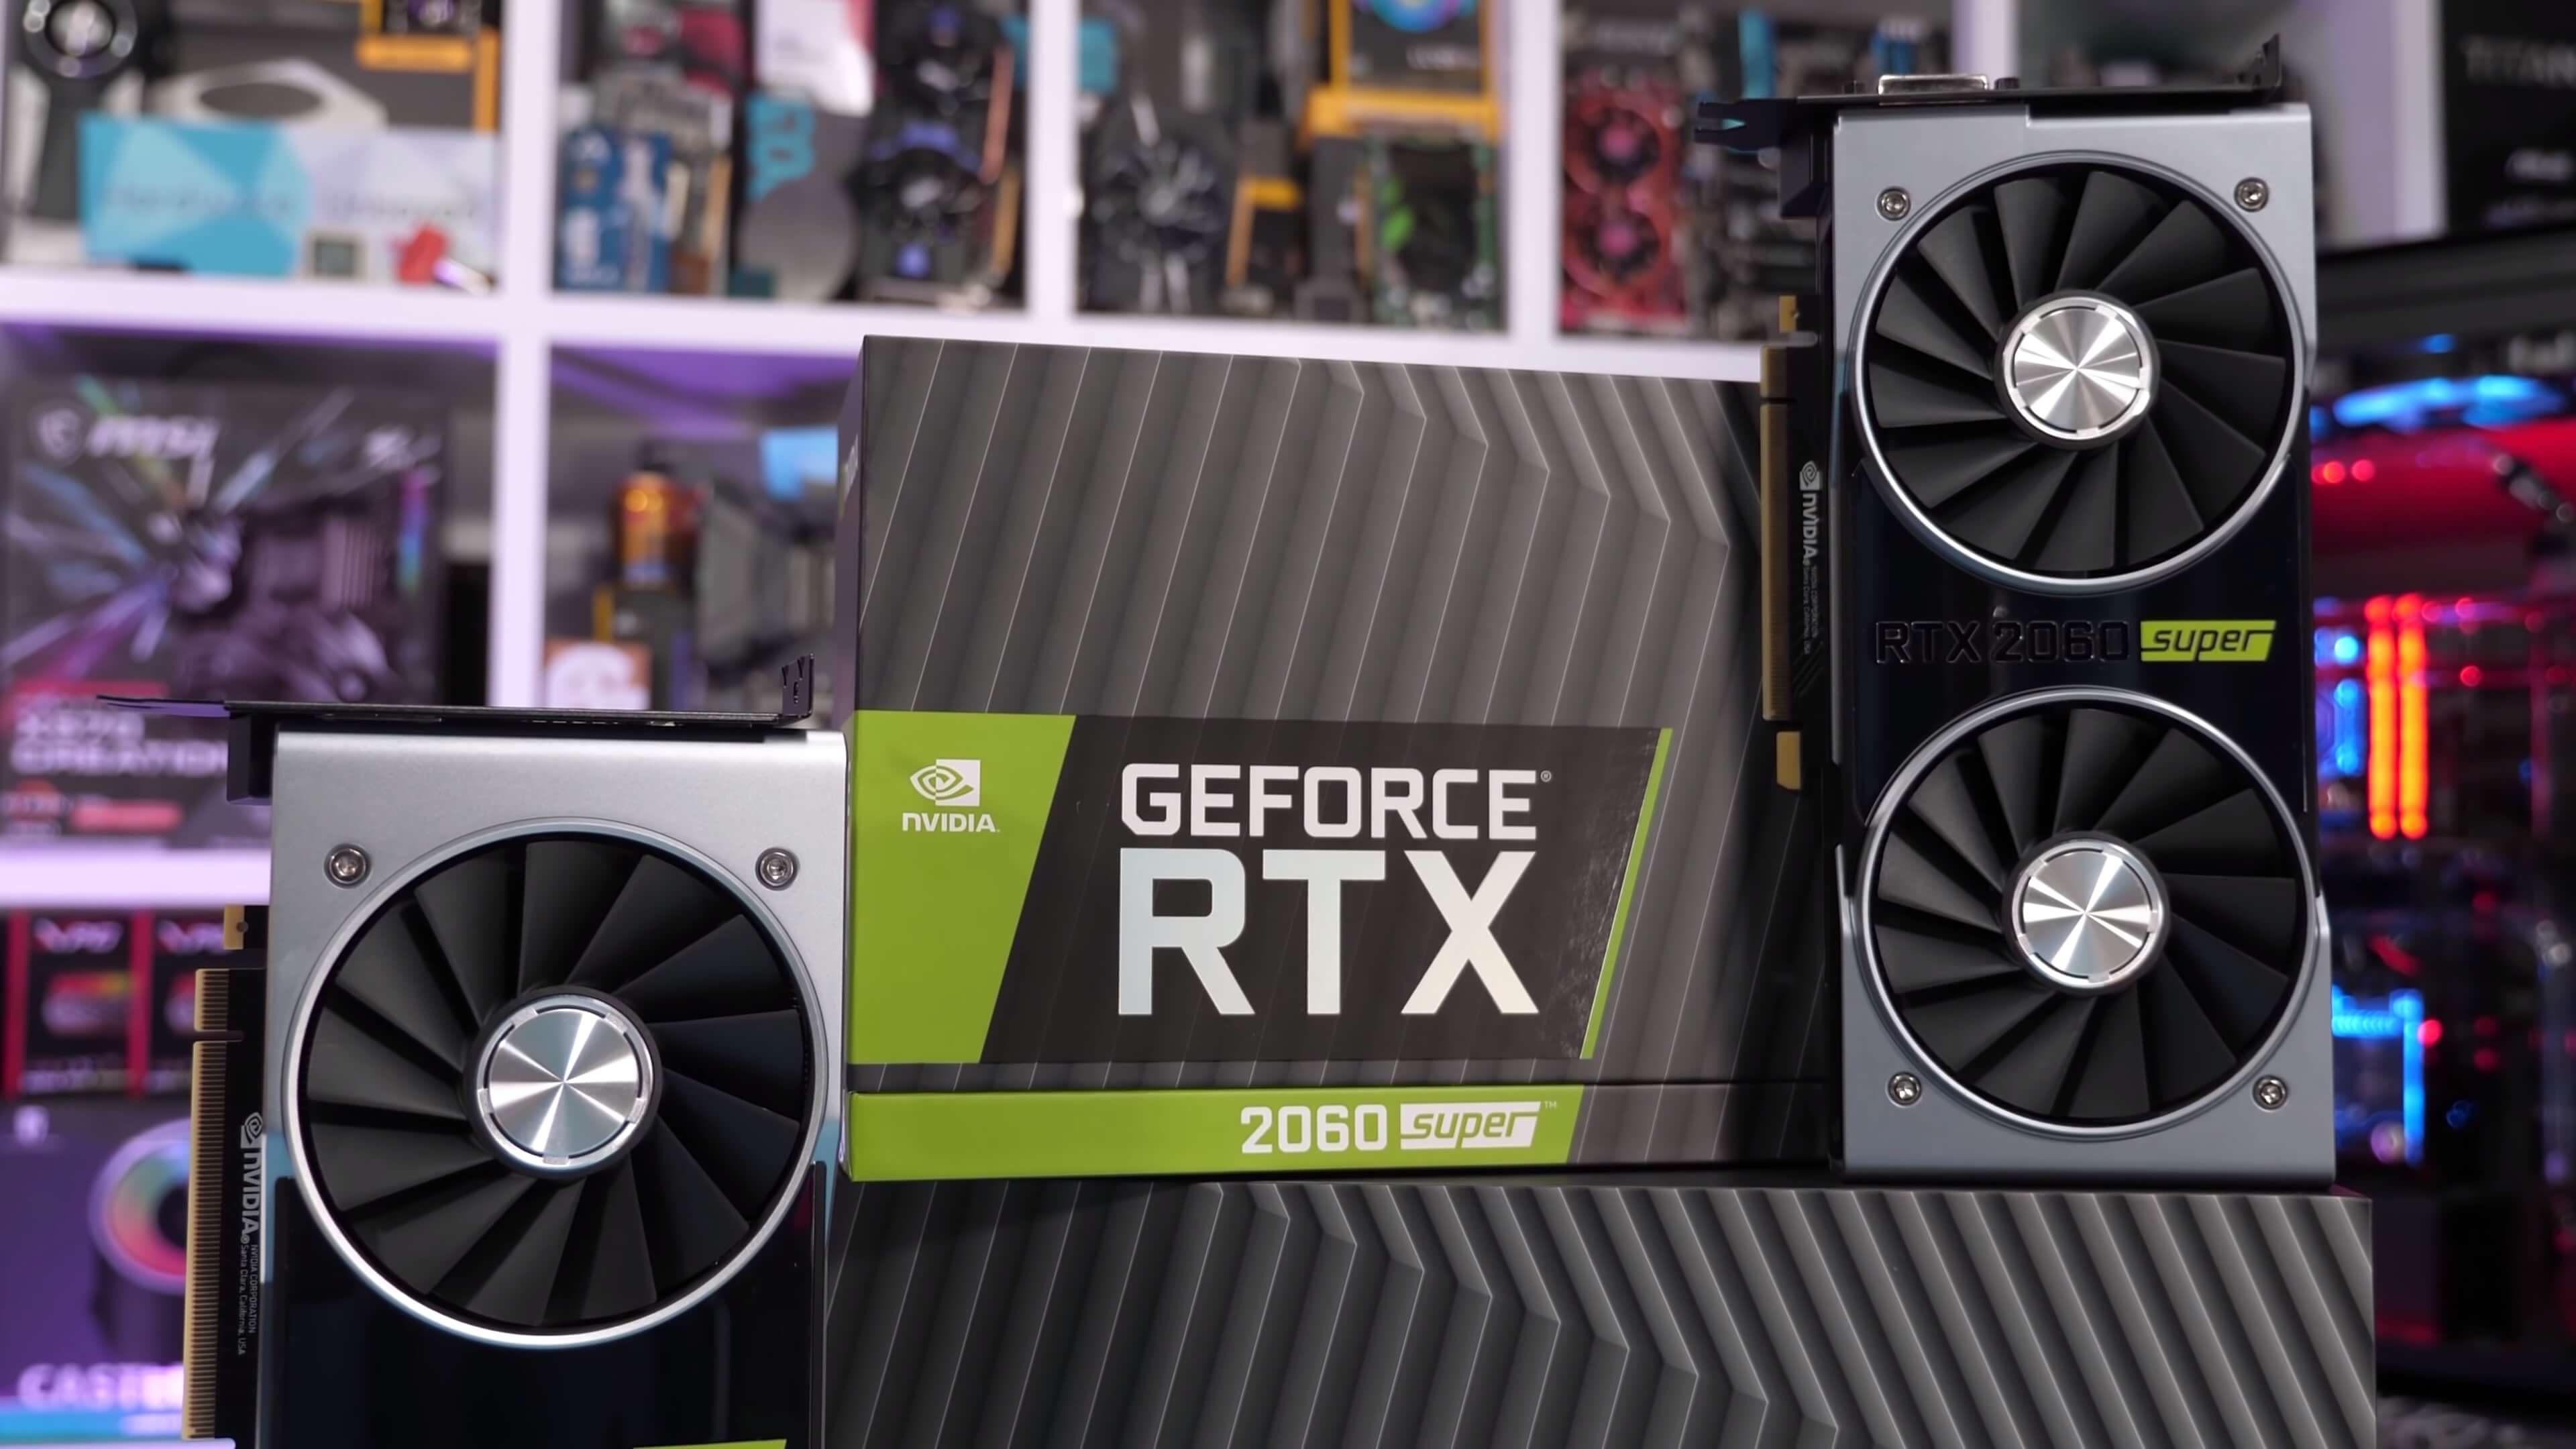  Radeon RX 5700 XT и GeForce RTX 2060 Super